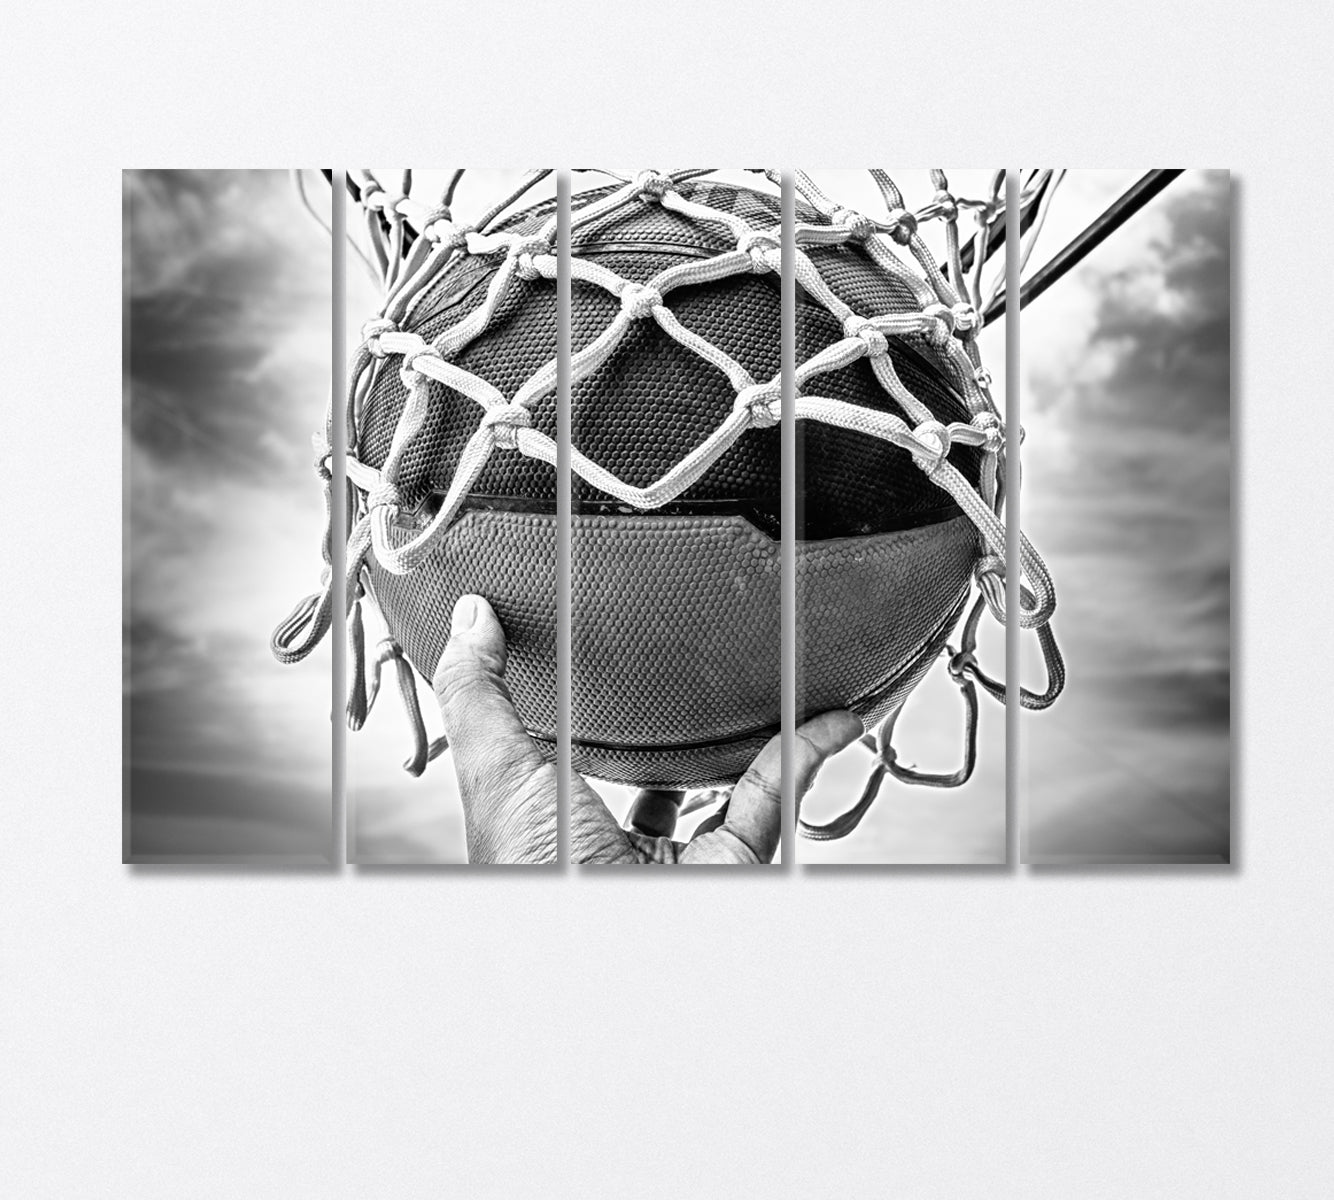 Basketball Ball in the Hoop Canvas Print-Canvas Print-CetArt-5 Panels-36x24 inches-CetArt